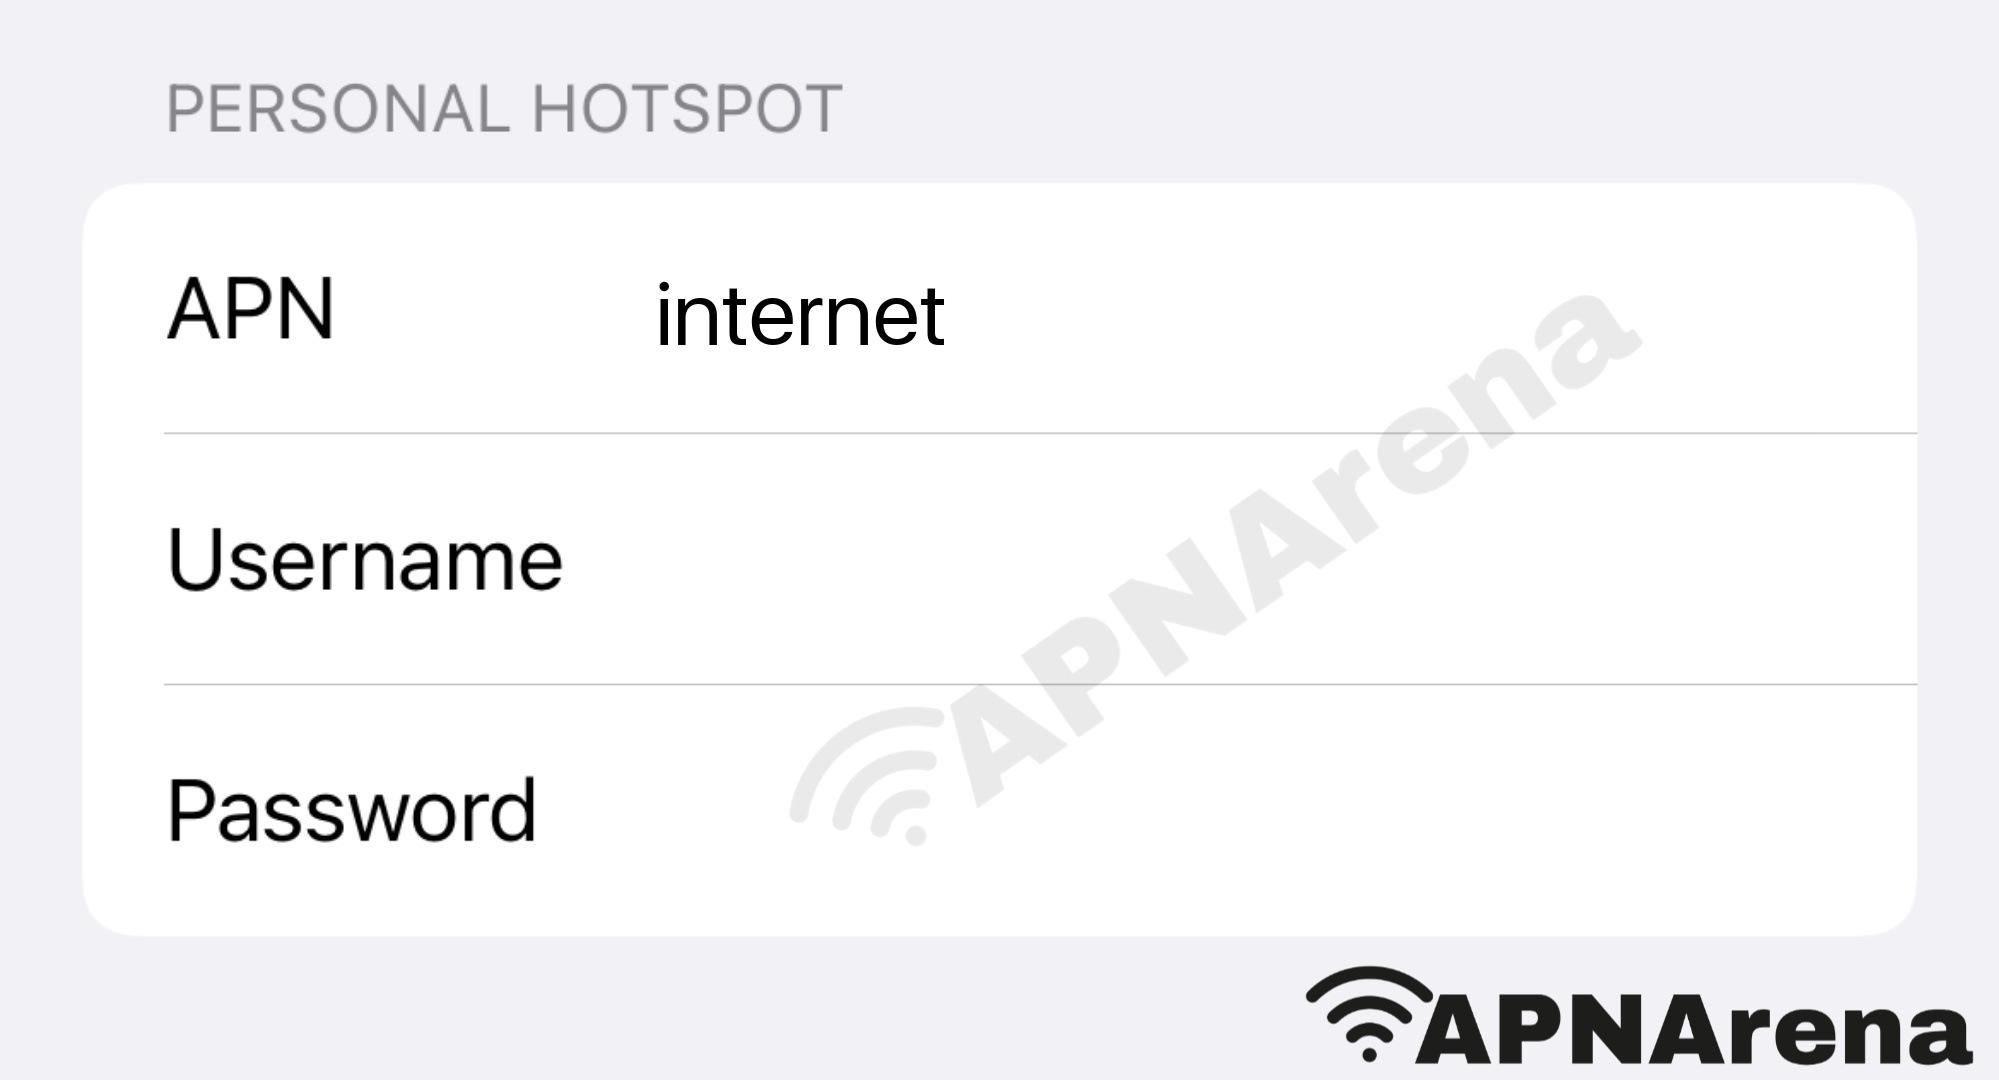 Maroc Telecom Personal Hotspot Settings for iPhone